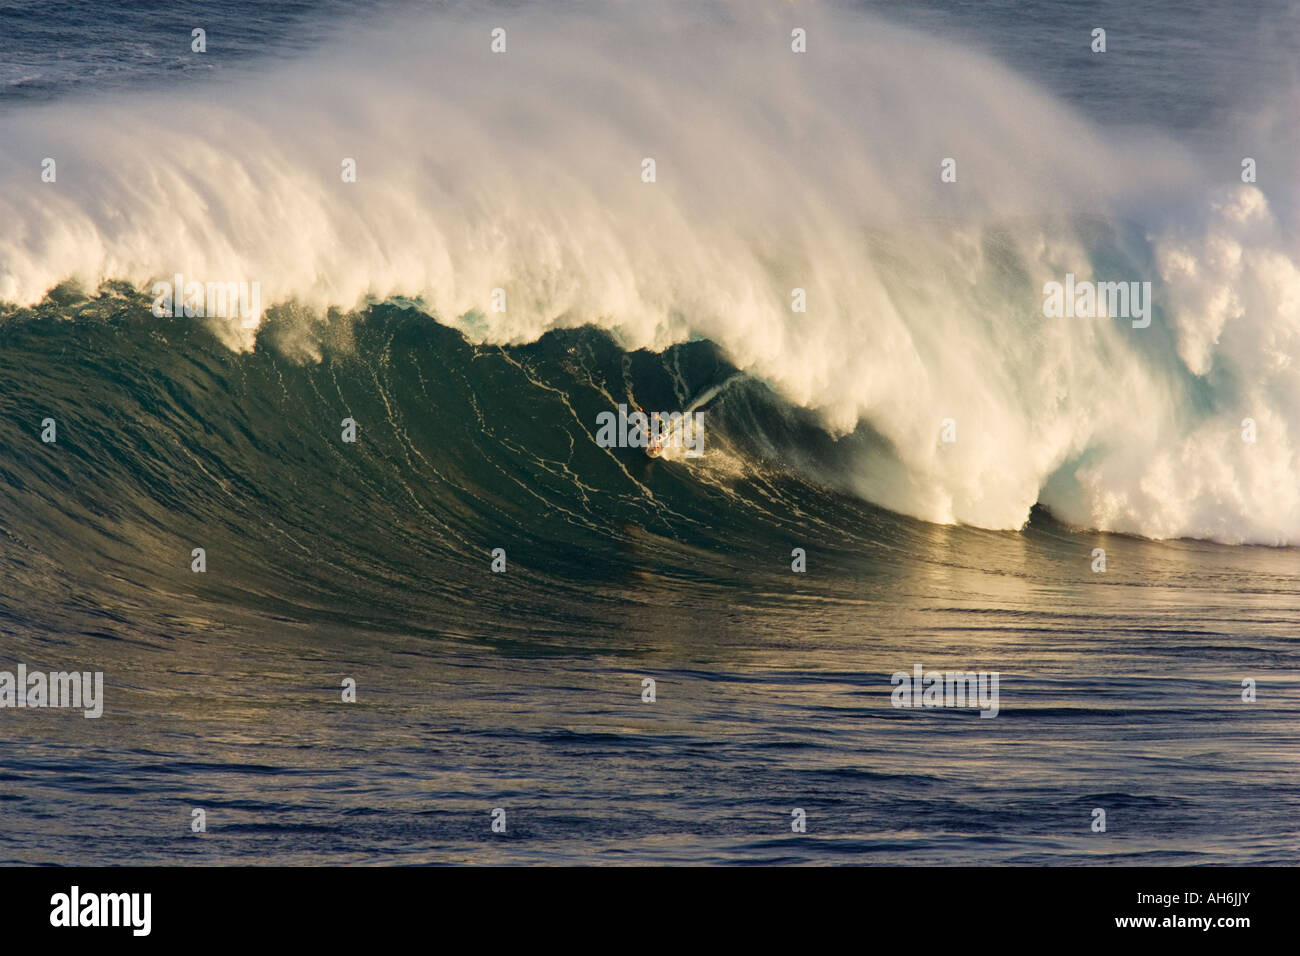 Un surfista cavalca un grande onda con spray offshore a ganasce, Maui. Foto Stock